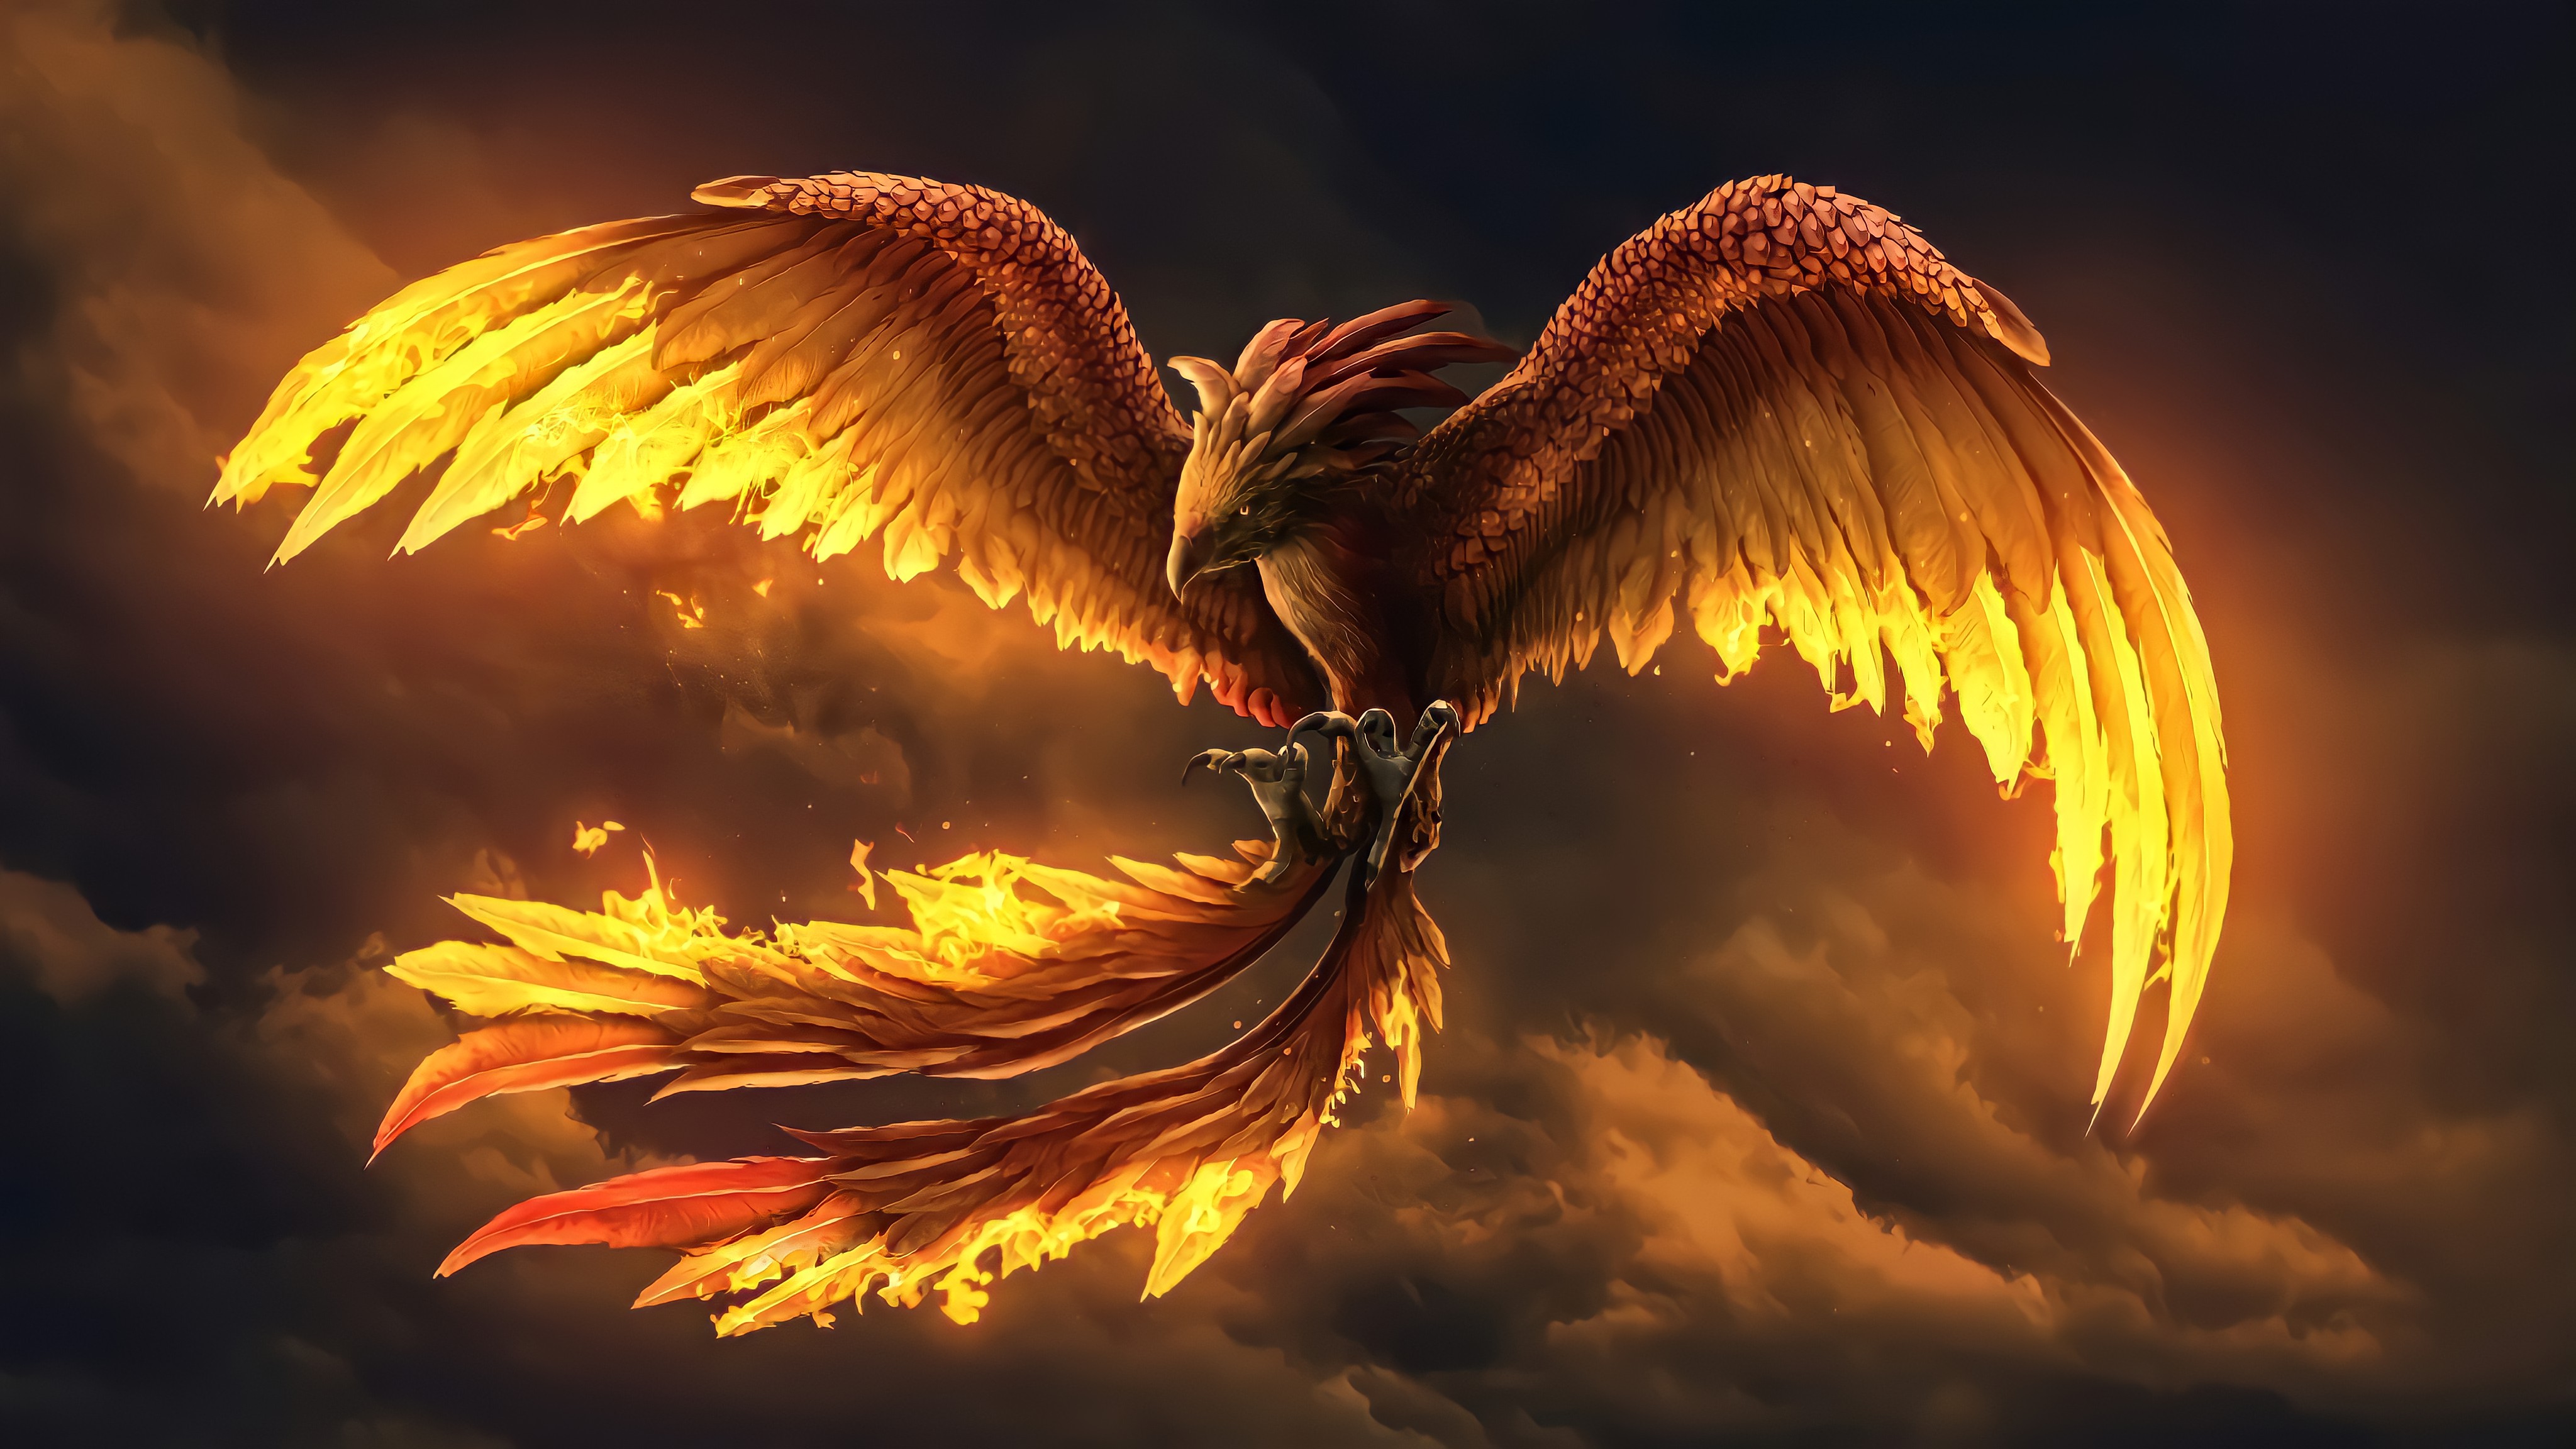 Bird Of Prey Fire Fly Phoenix 4096x2304.